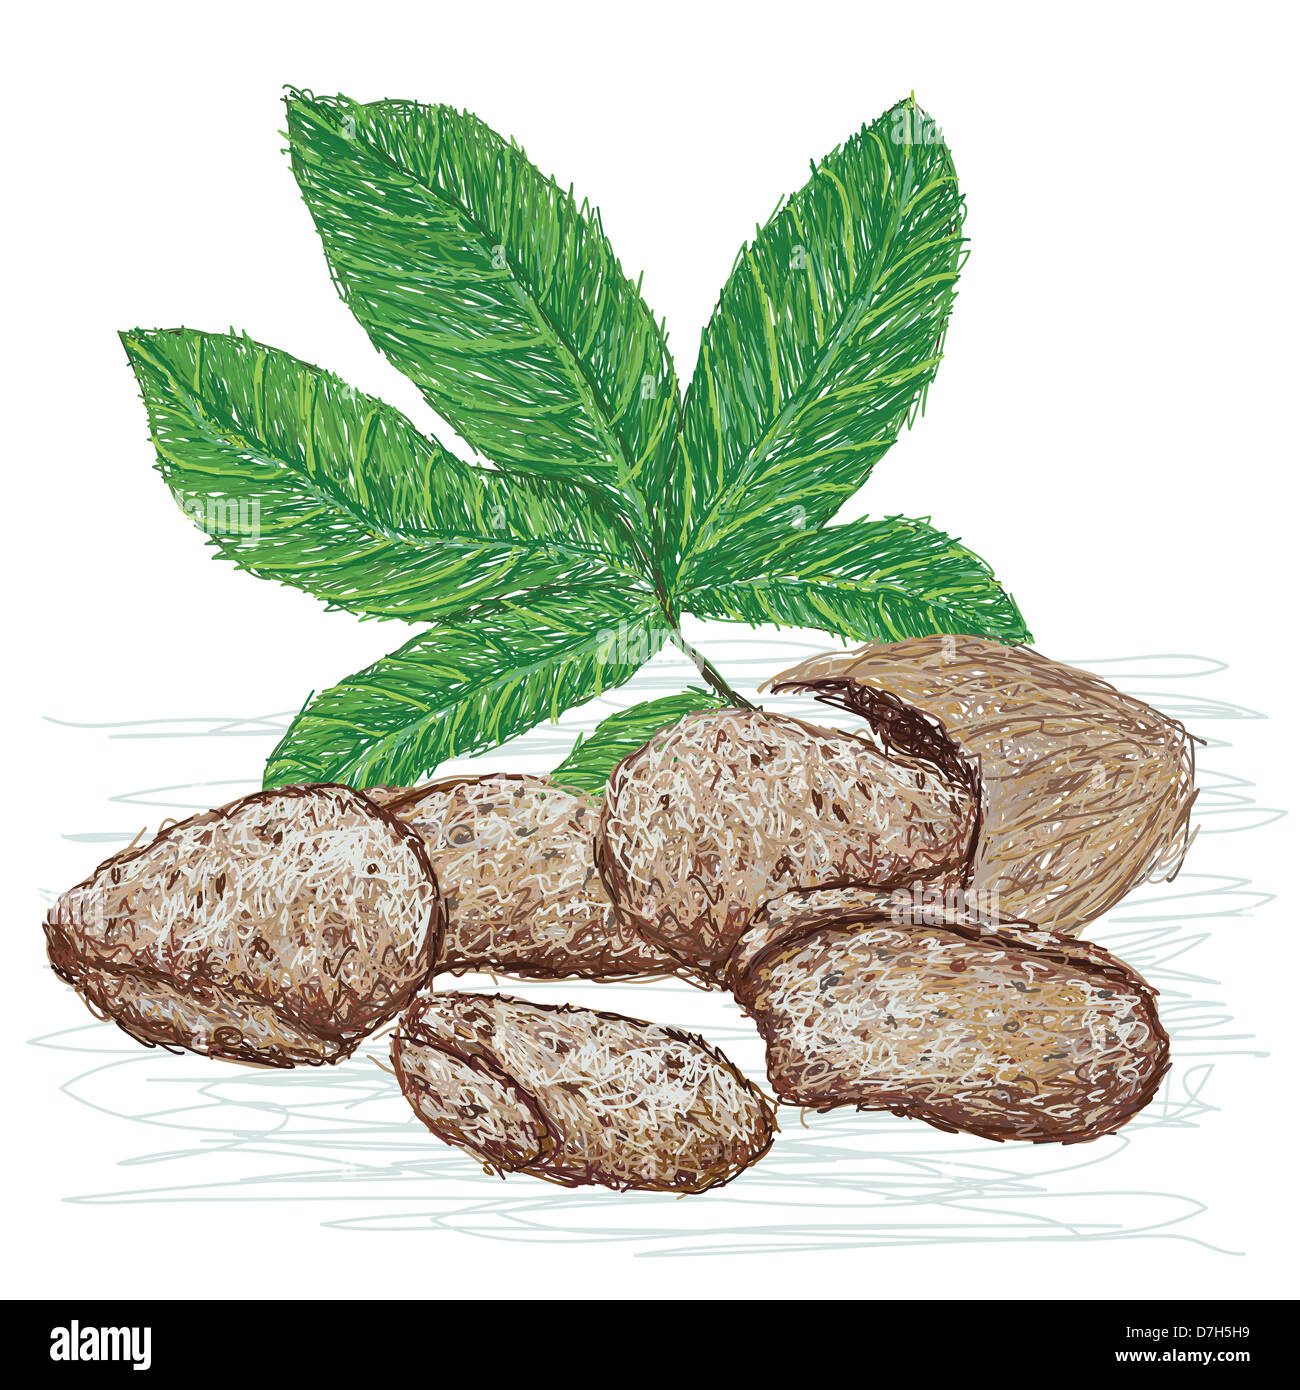 illustration of tahitian chestnut, polynesian chestnut with scientific name Inocarpus fagifer. Stock Photo